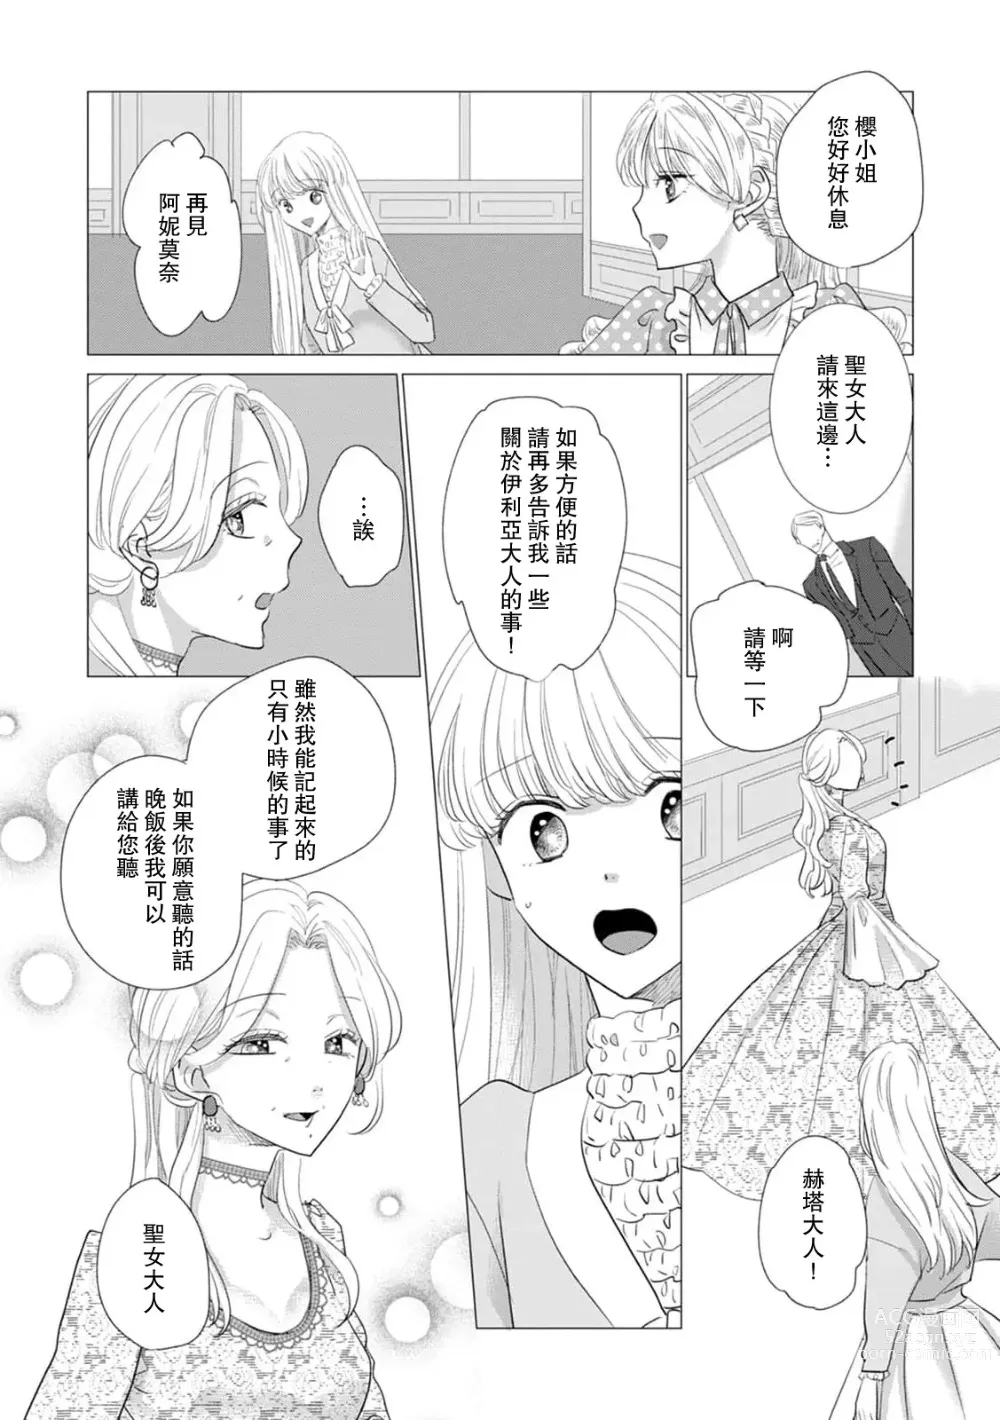 Page 409 of manga 被深拥的反派千金进入反套路王子的强宠攻略线!? 1-16